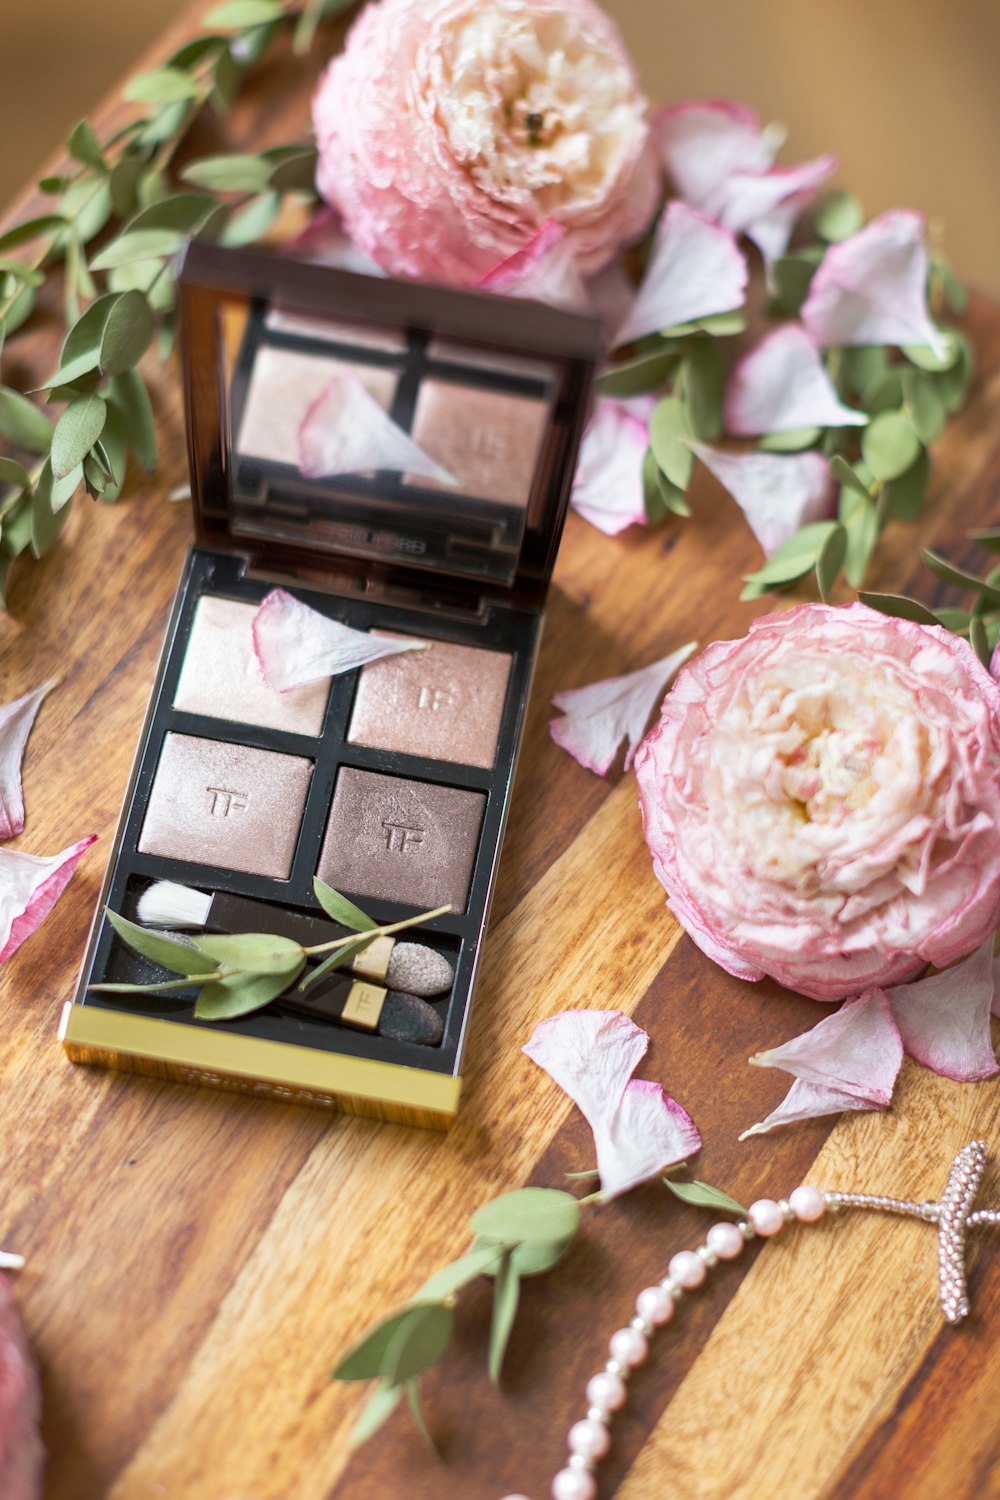 paleta de maquillaje junto a flores rosas